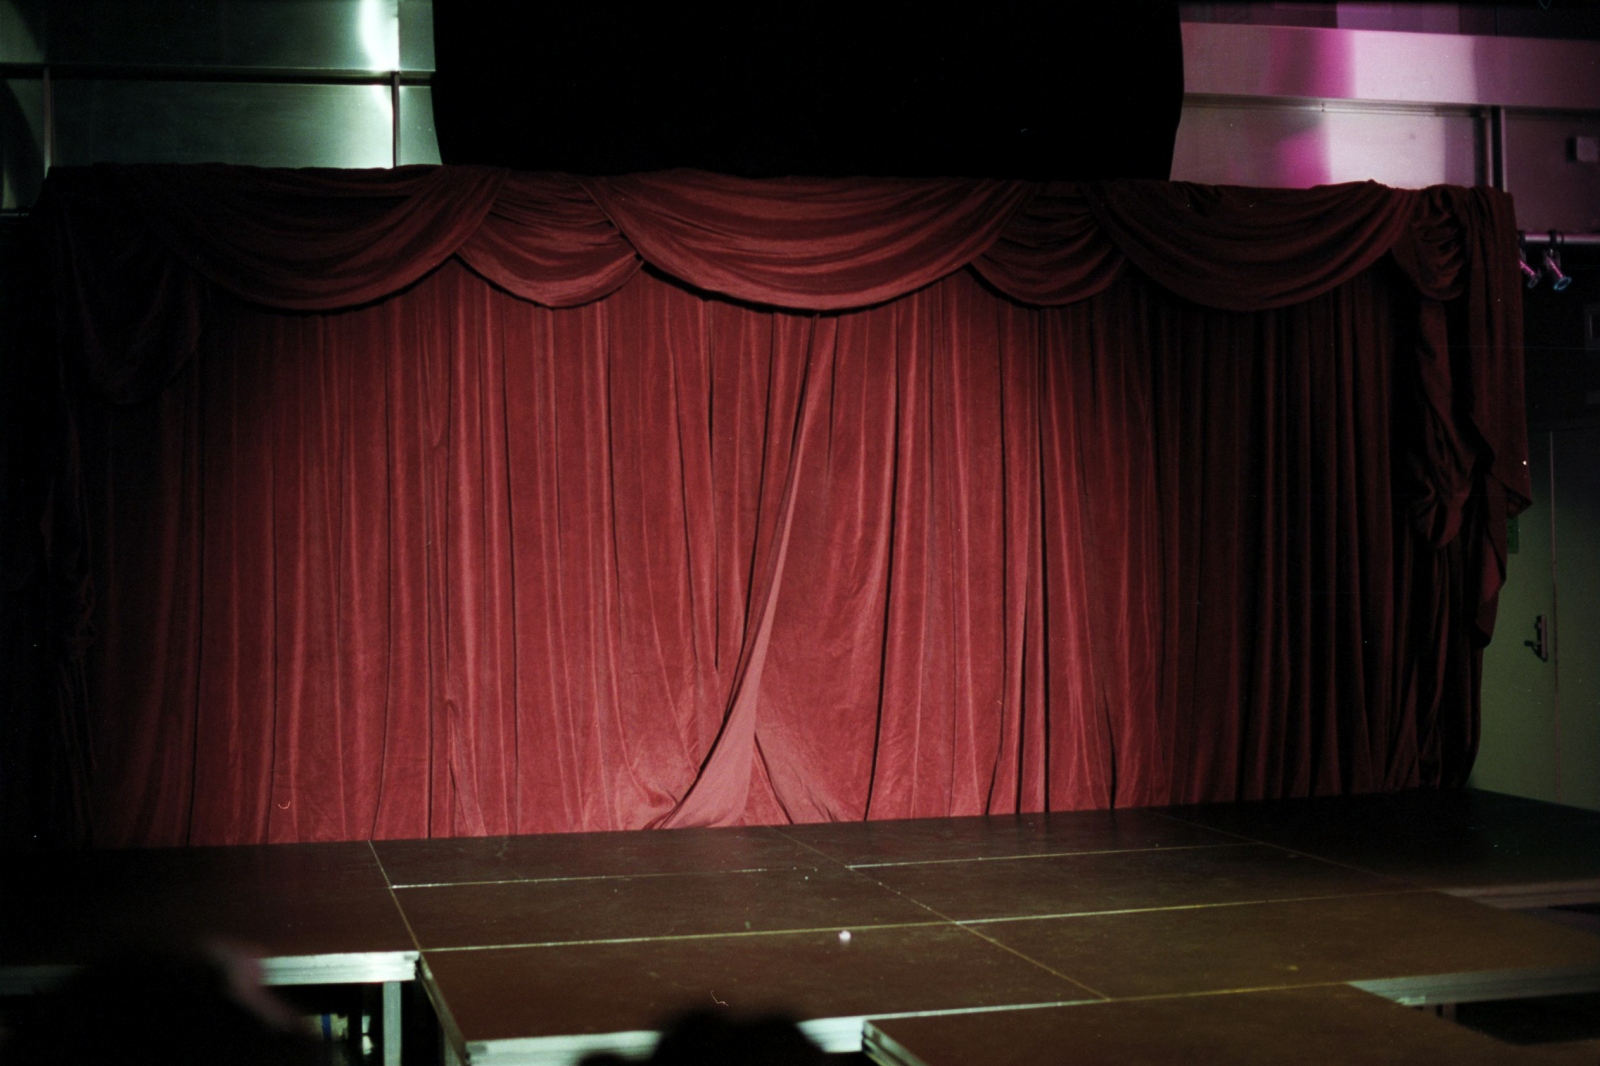  The curtain at a drag contest, New York, NY 